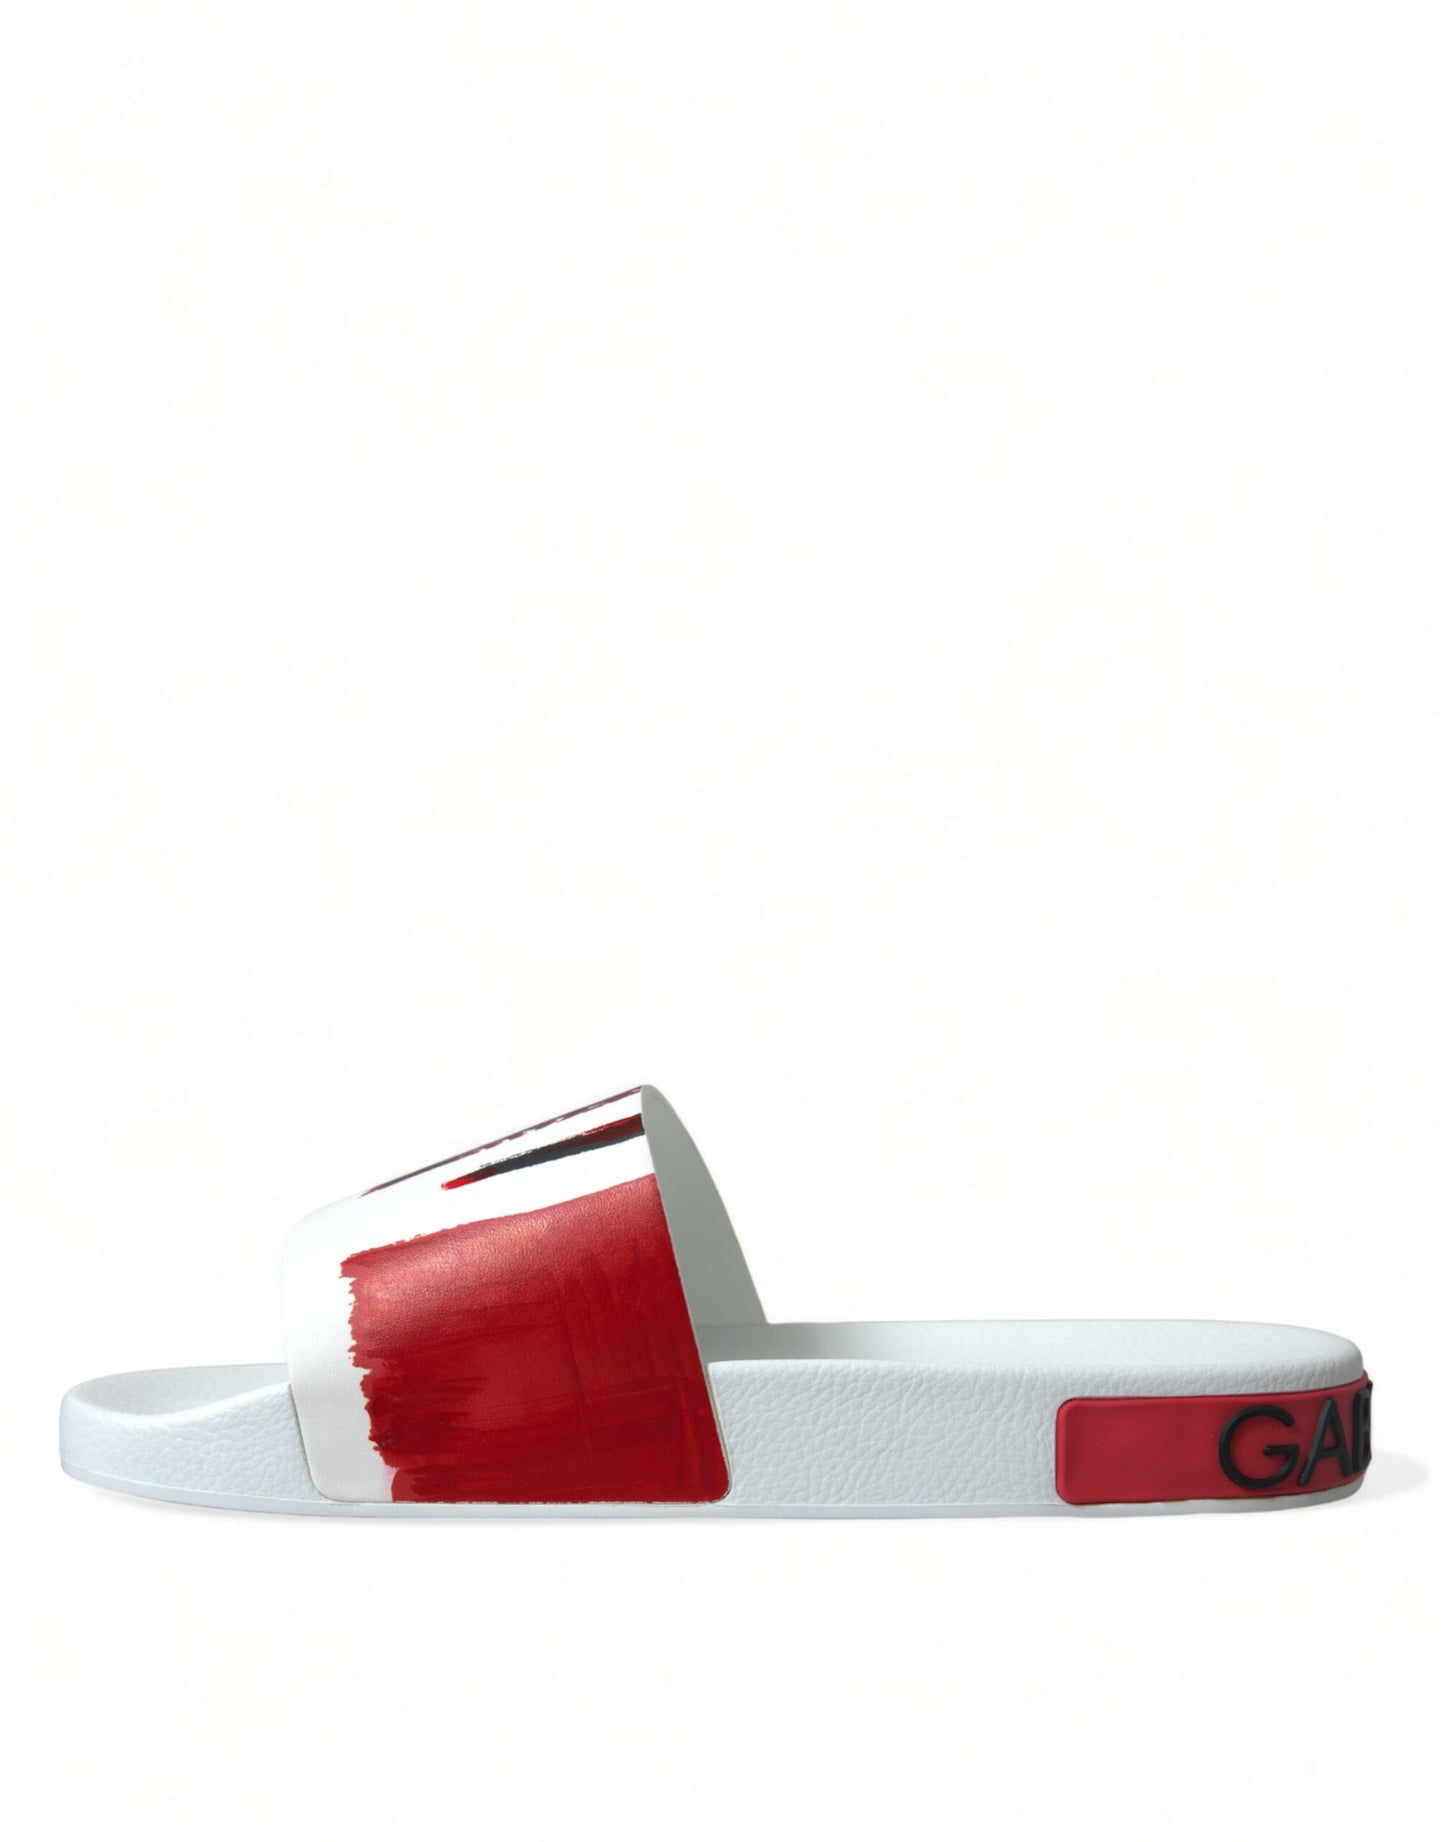 Dolce & Gabbana Chic White & Red Leather Mens Slides Sandals